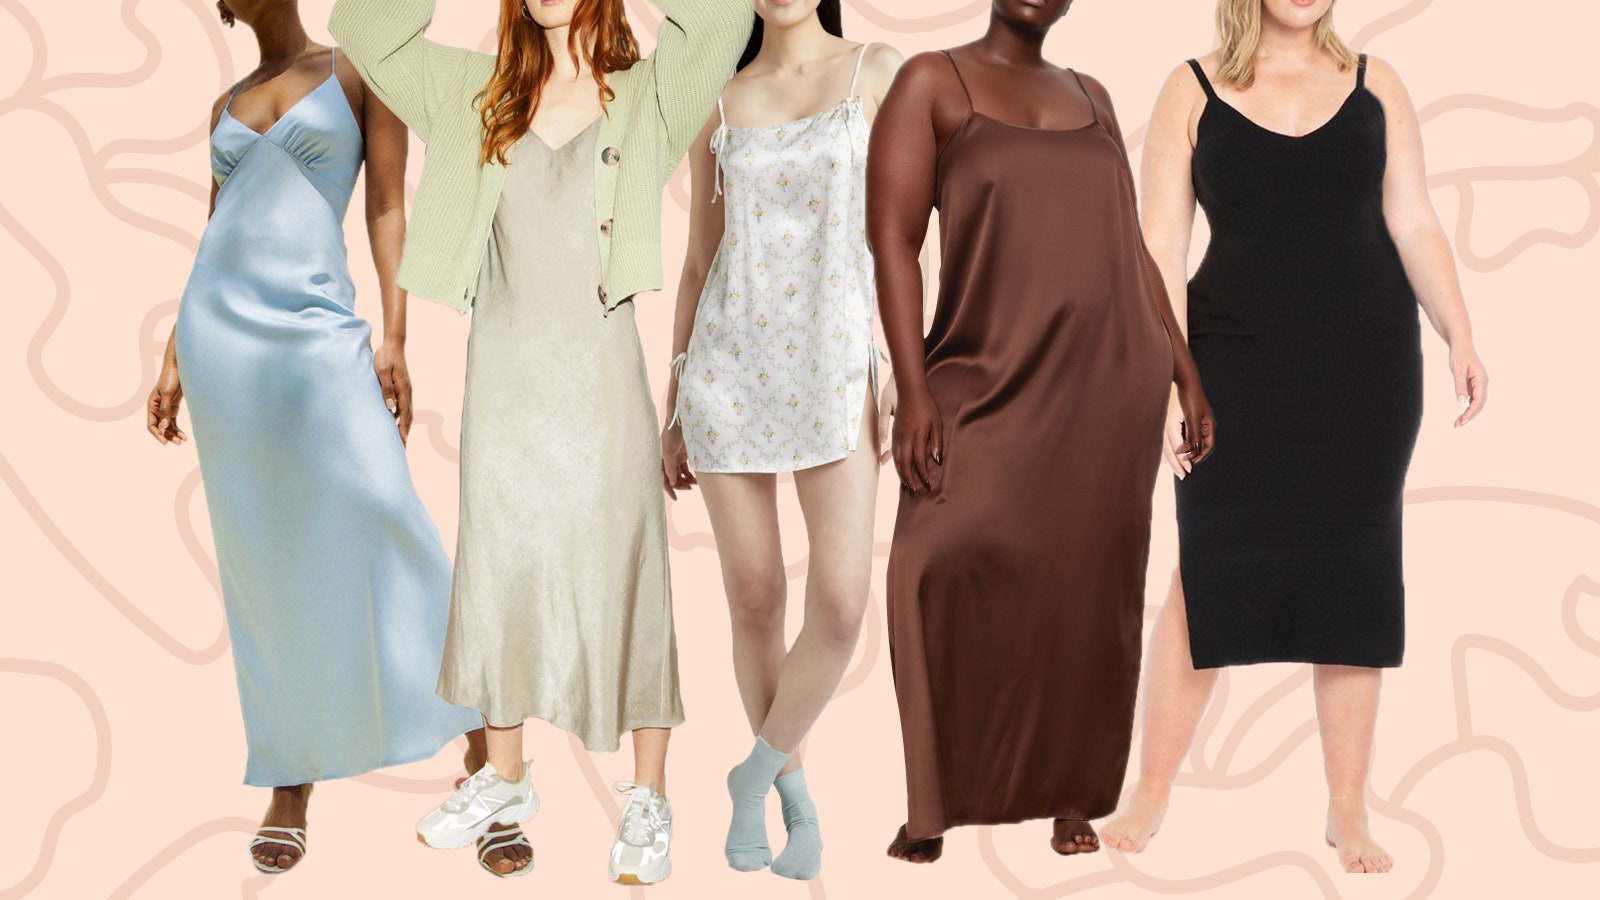 slip dresses_three models in various slip dresses (blue, pistachio, brown)